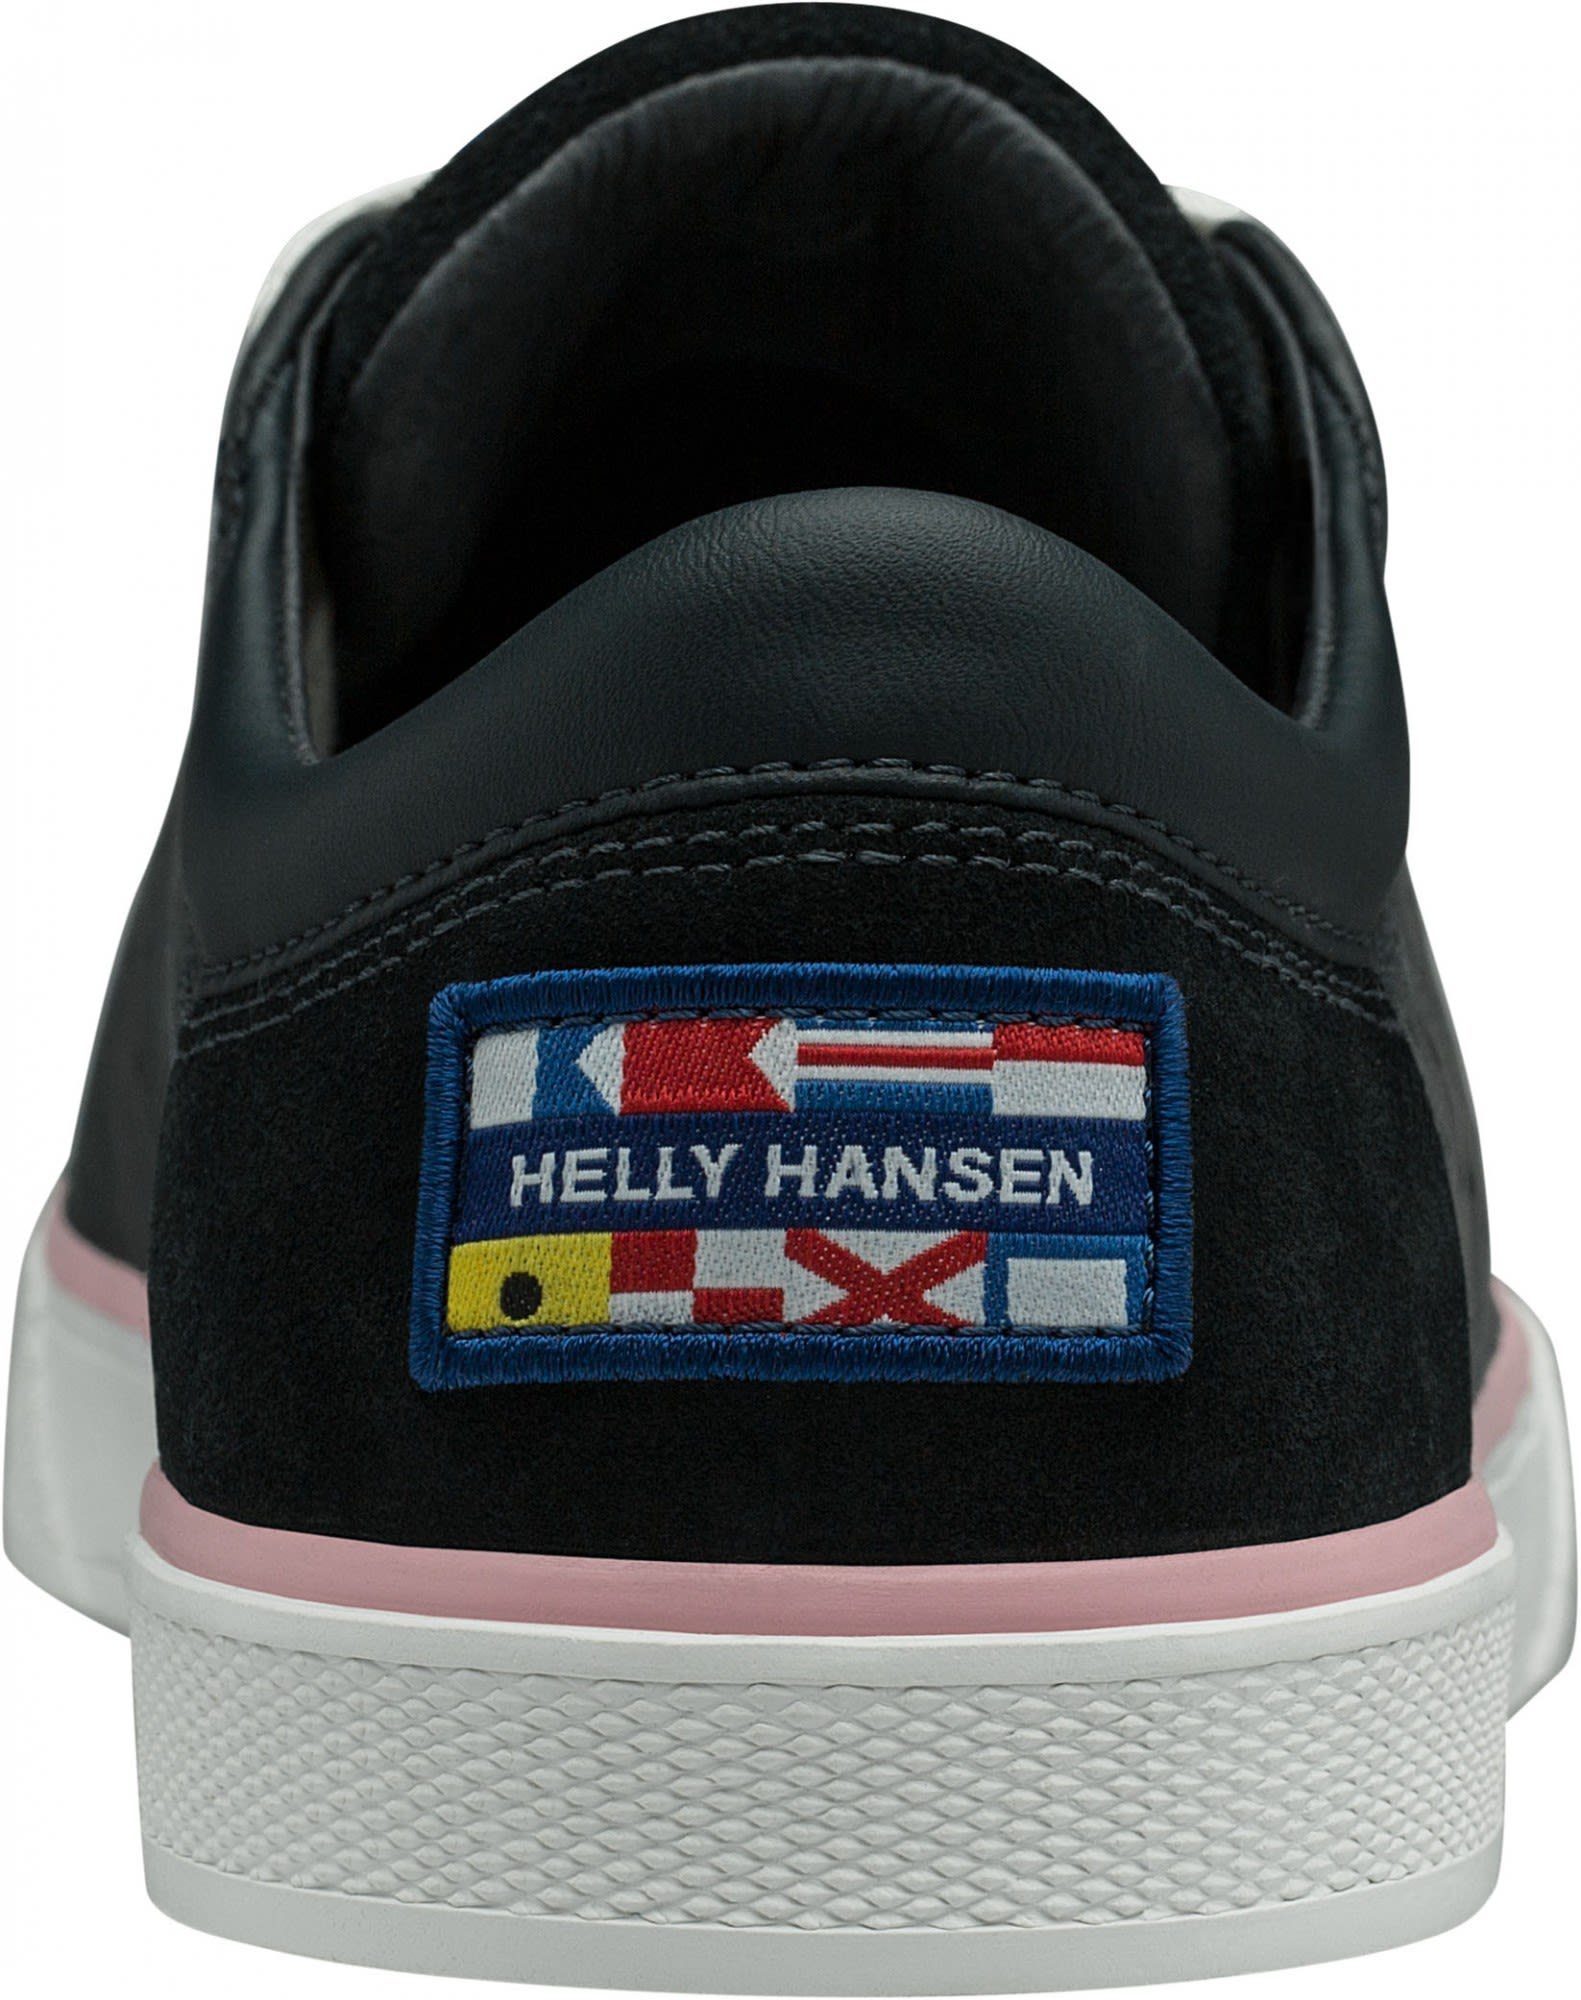 Helly Hansen Helly Leather Damen Outdoorschuh W Hansen Copenhagen Shoe